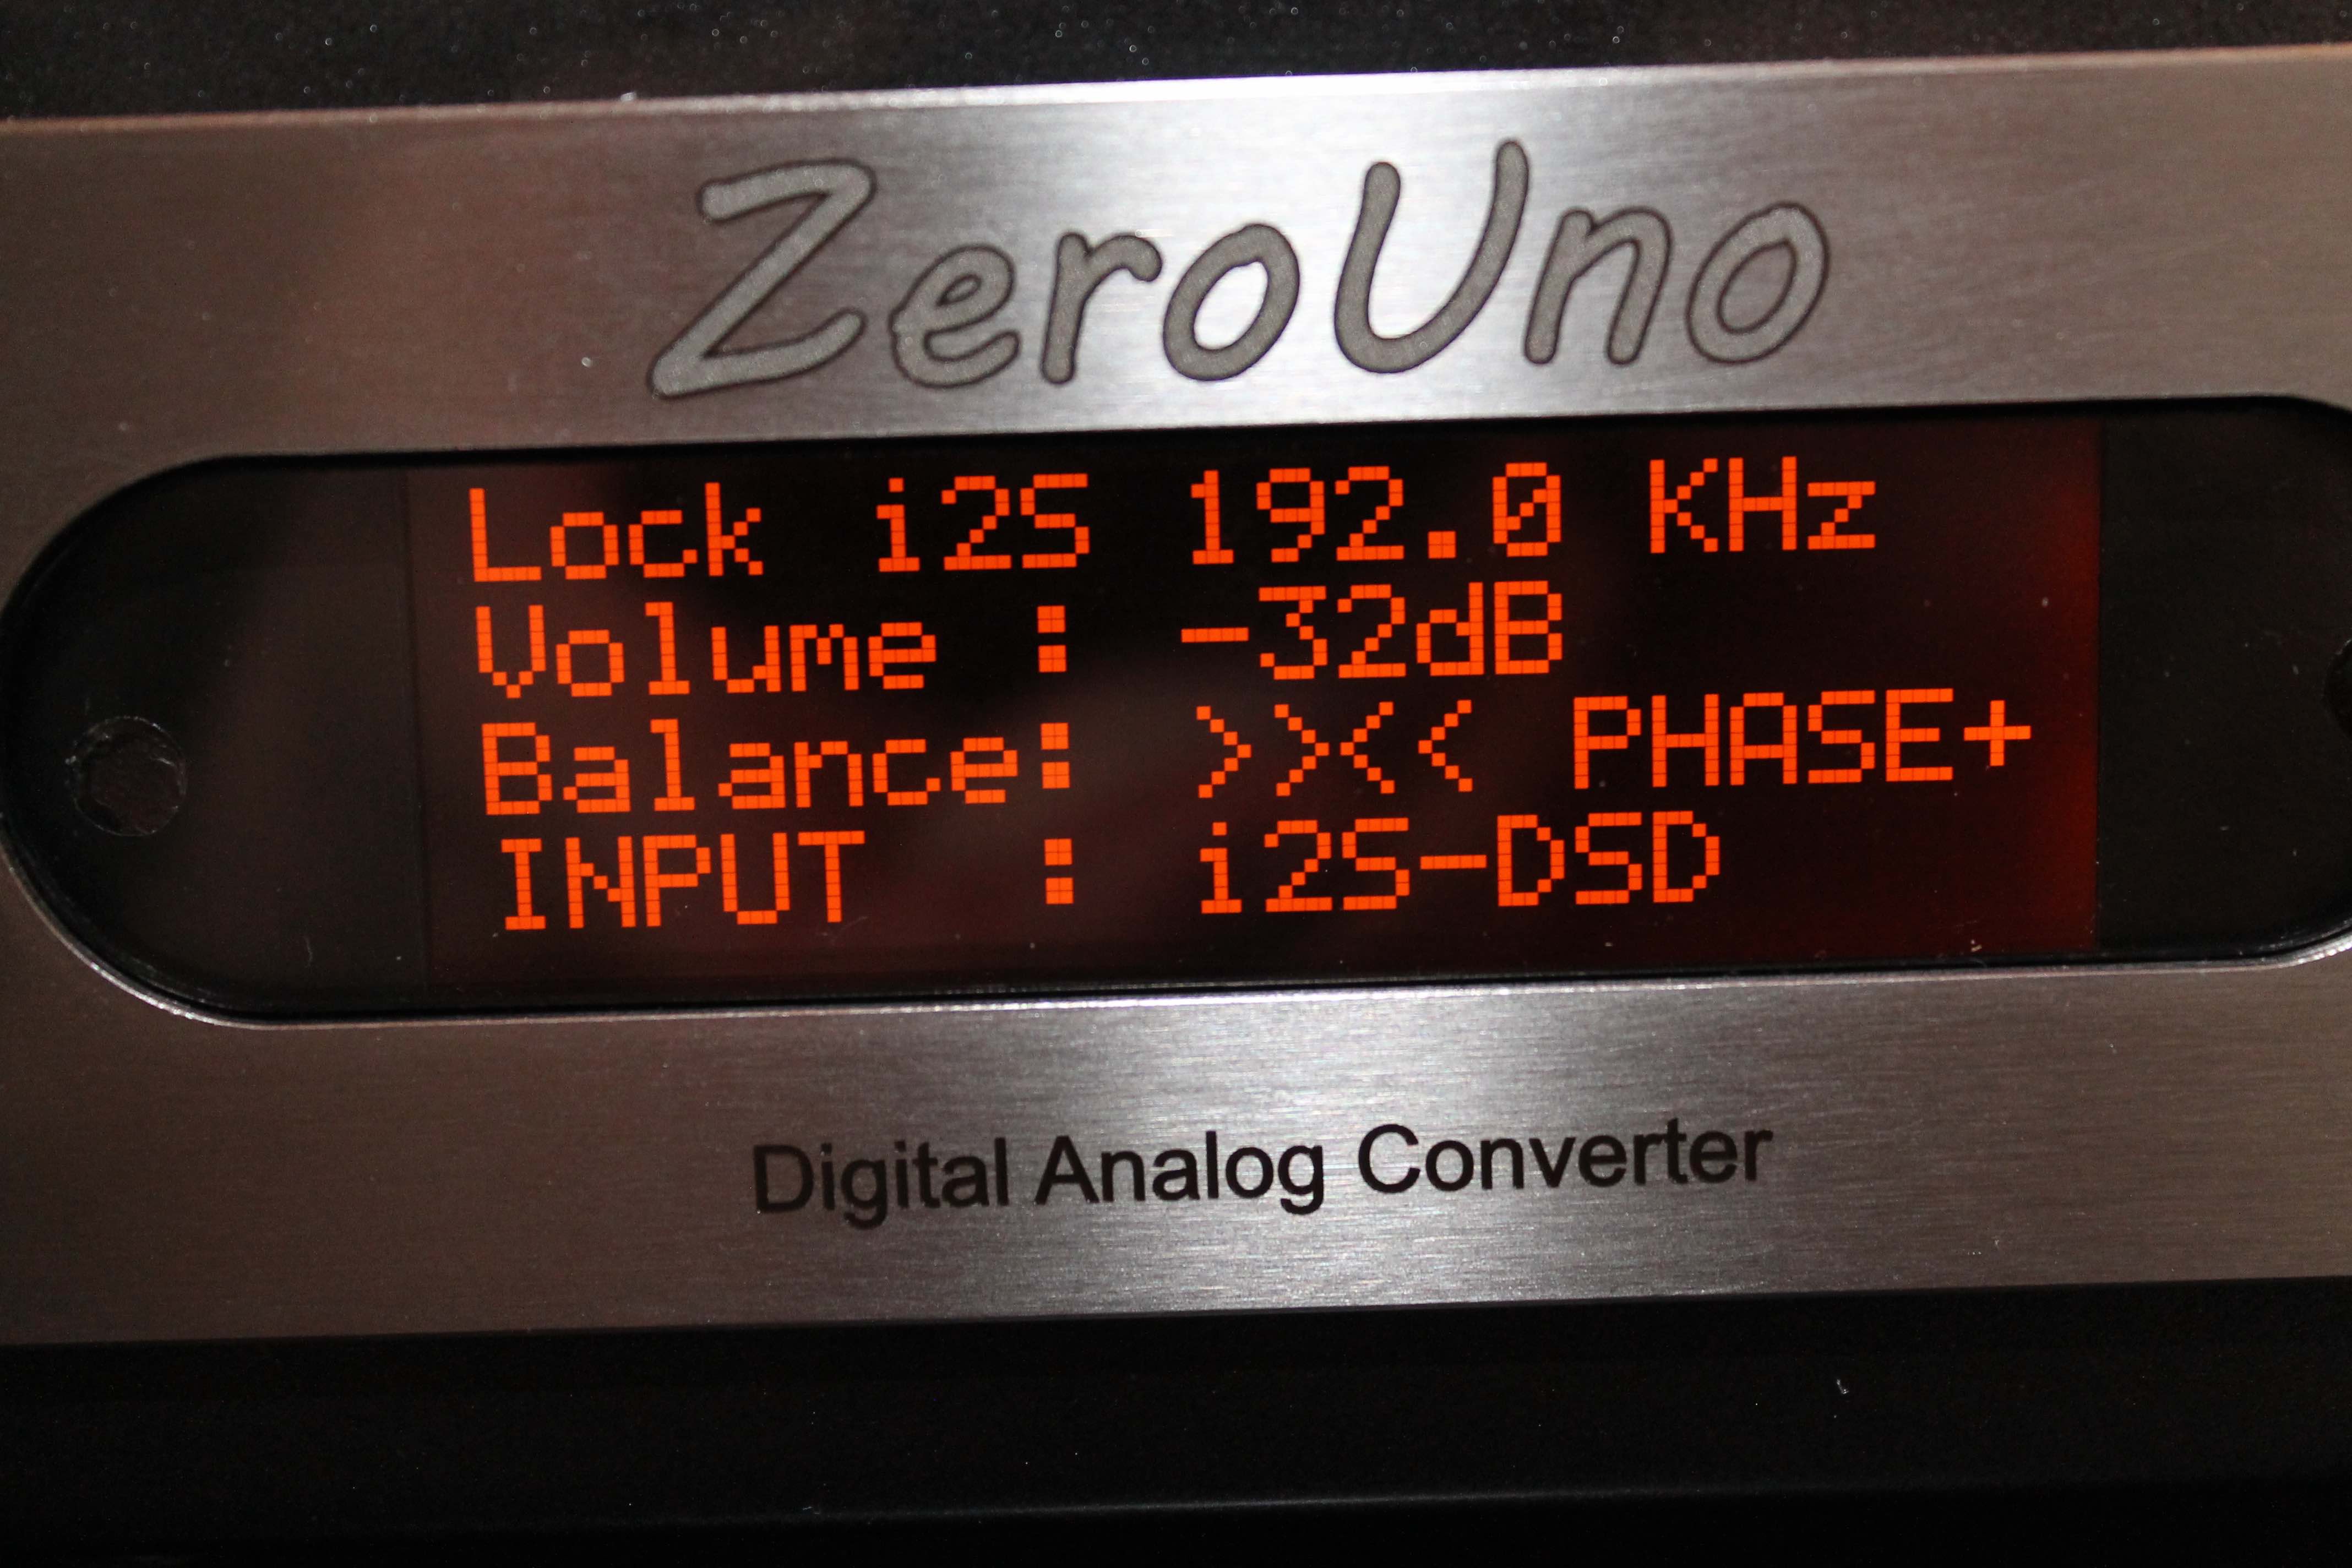 ZeroUno DAC: Samplingfrequenz im Display